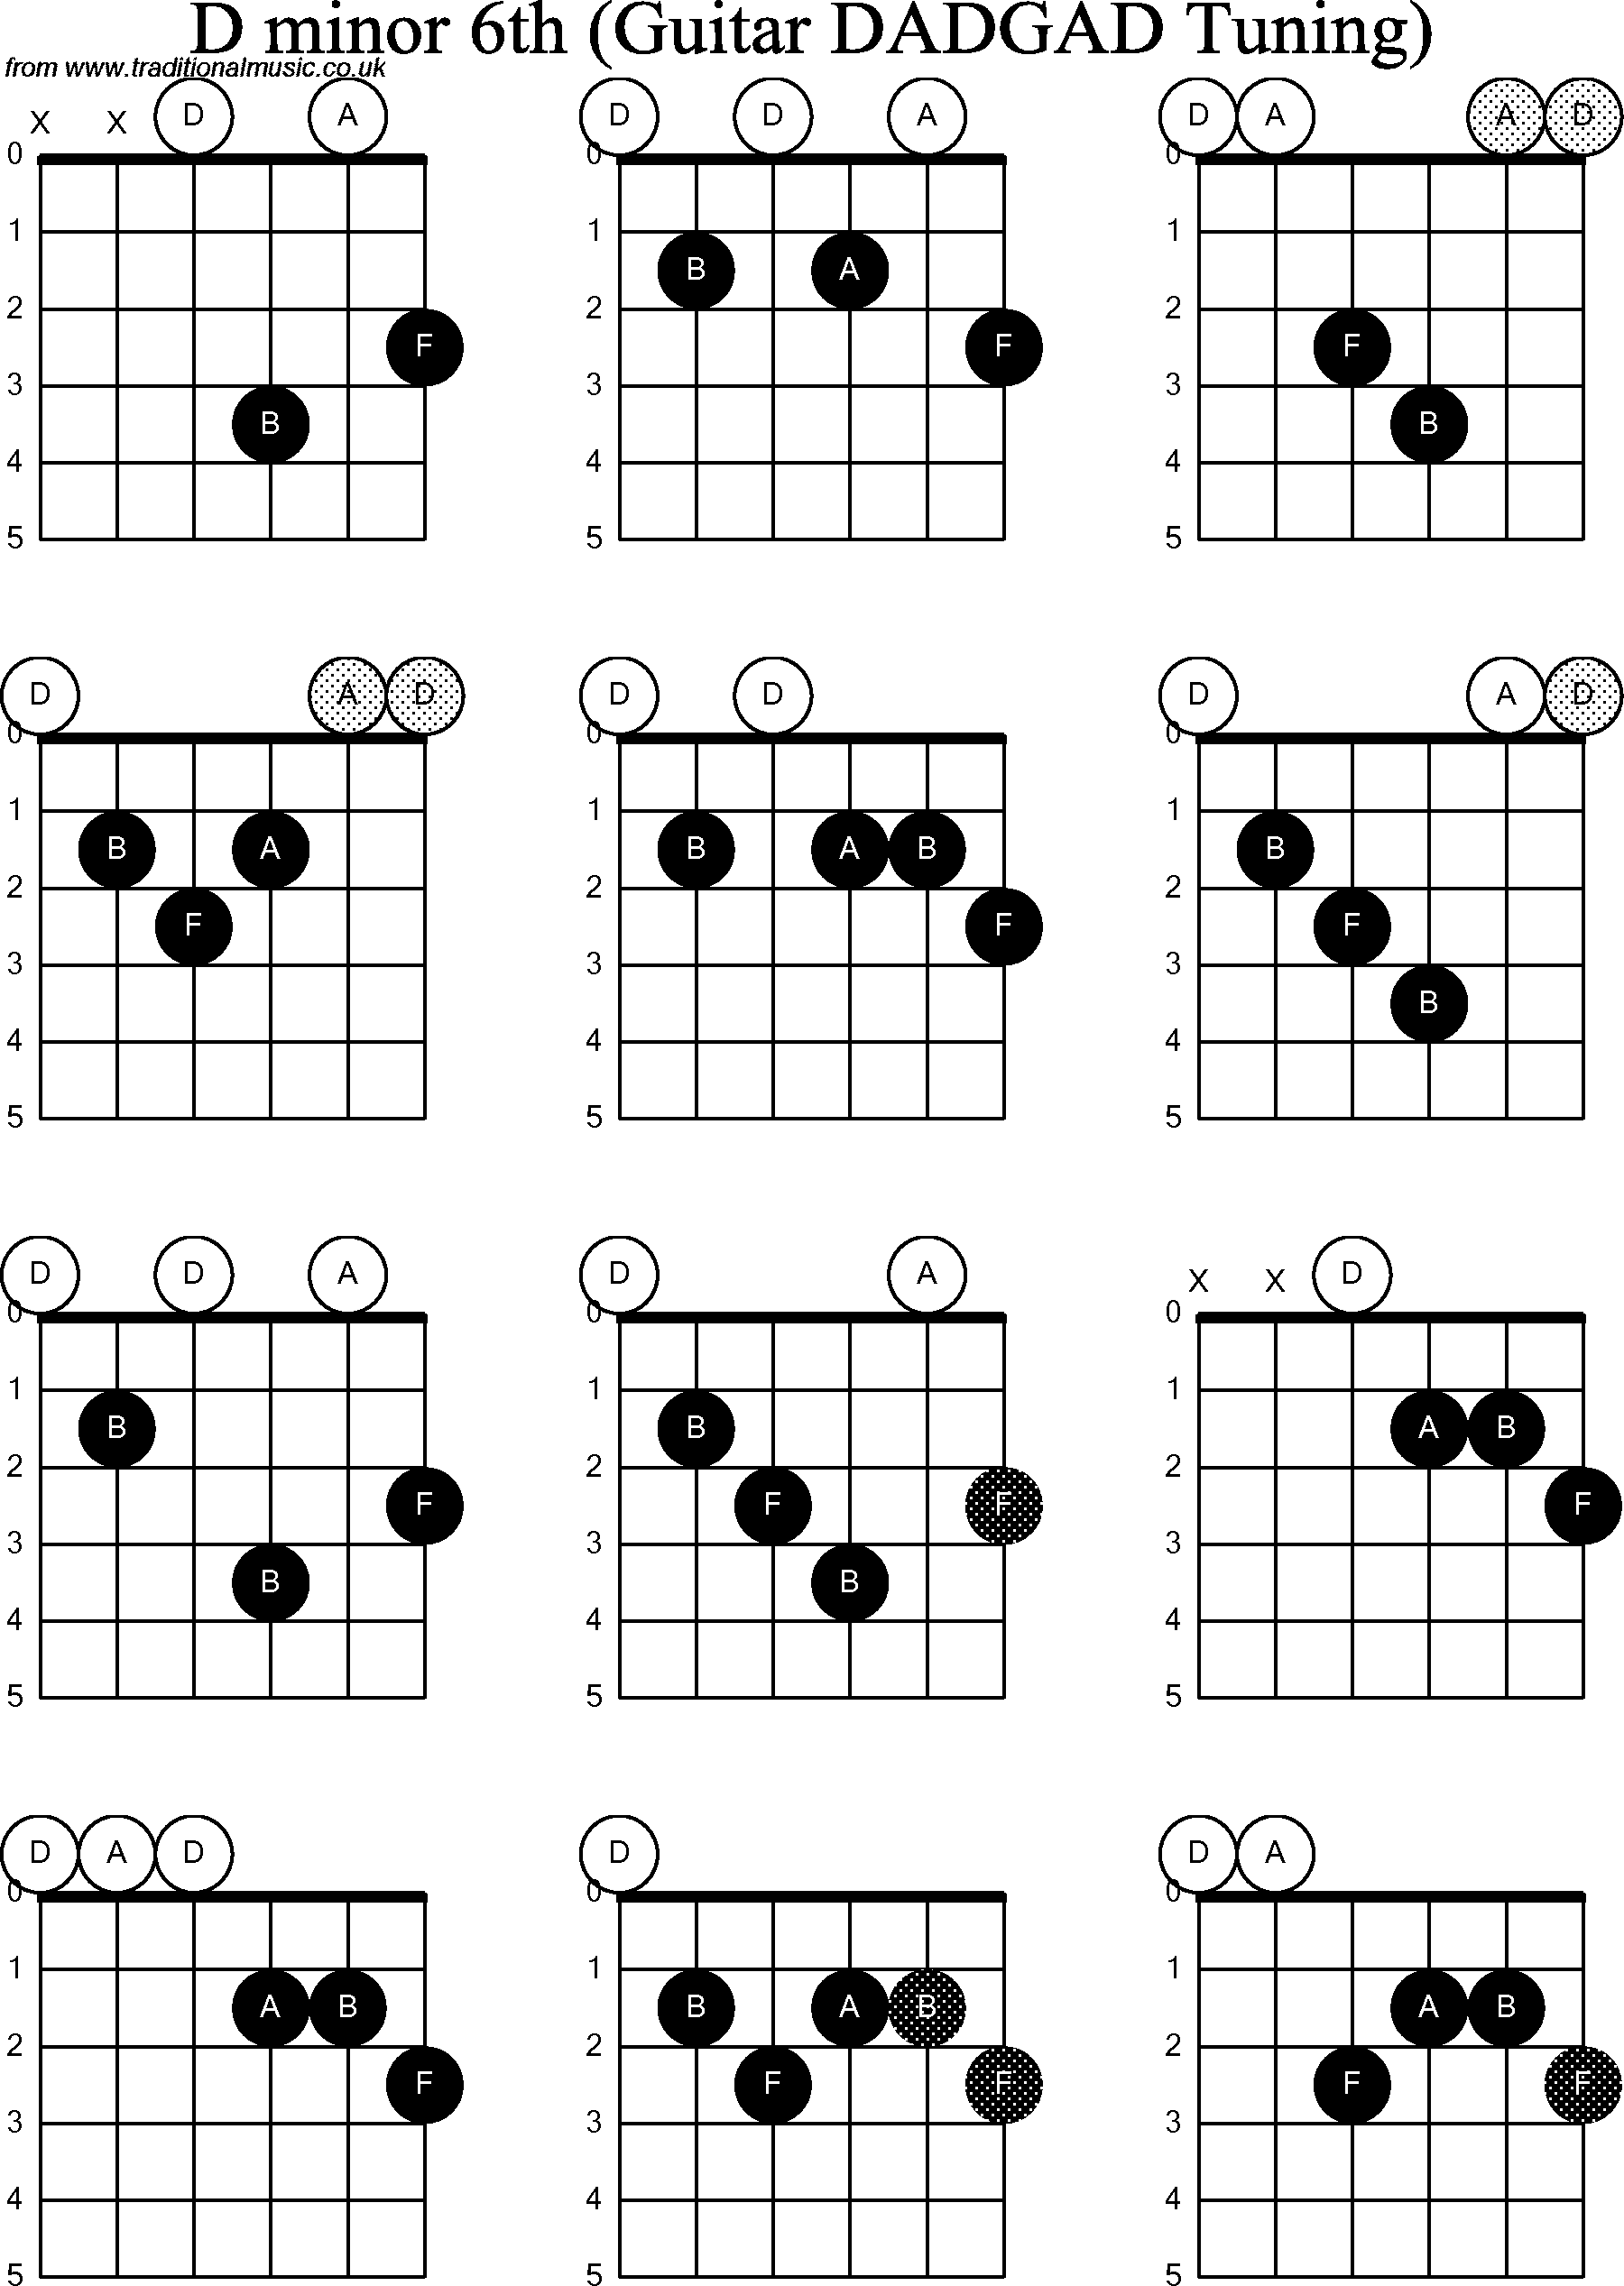 Chord Diagrams for D Modal Guitar(DADGAD), D Minor6th